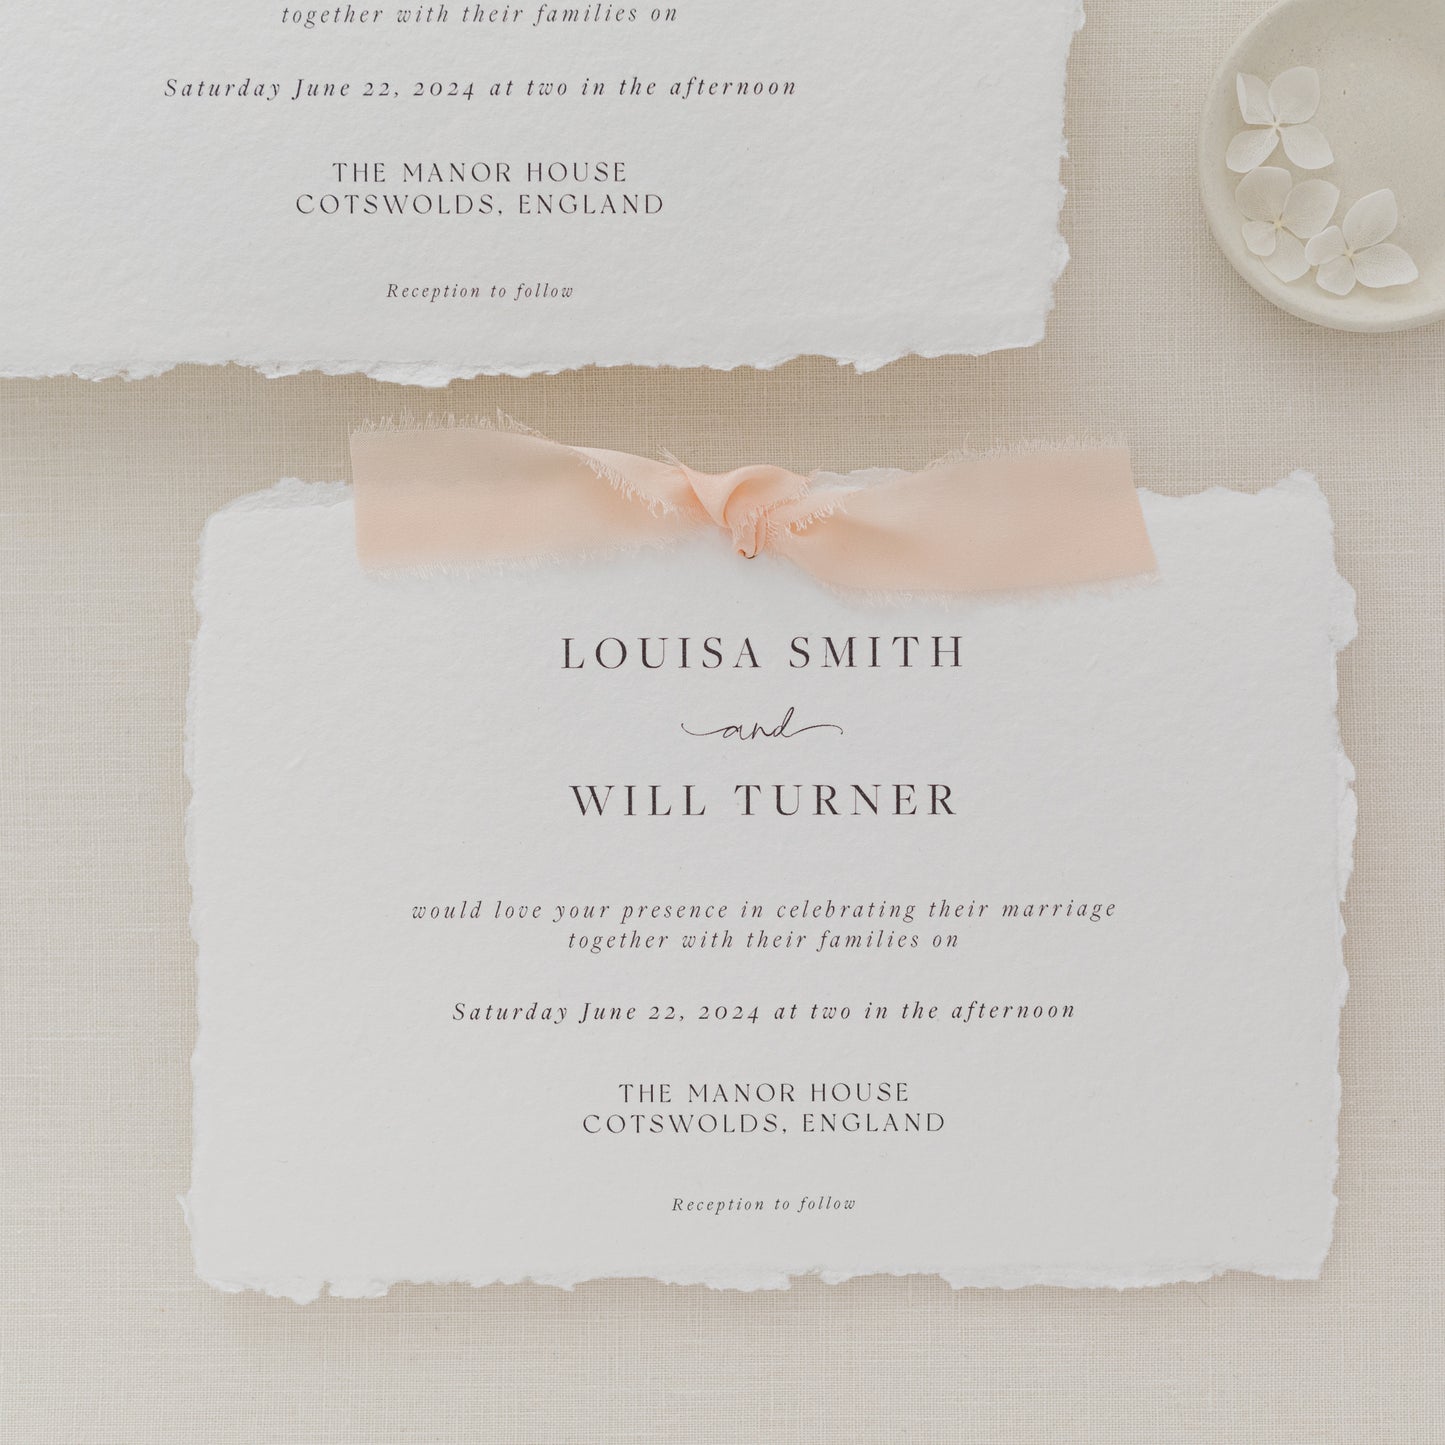 Louisa Wedding Invitation